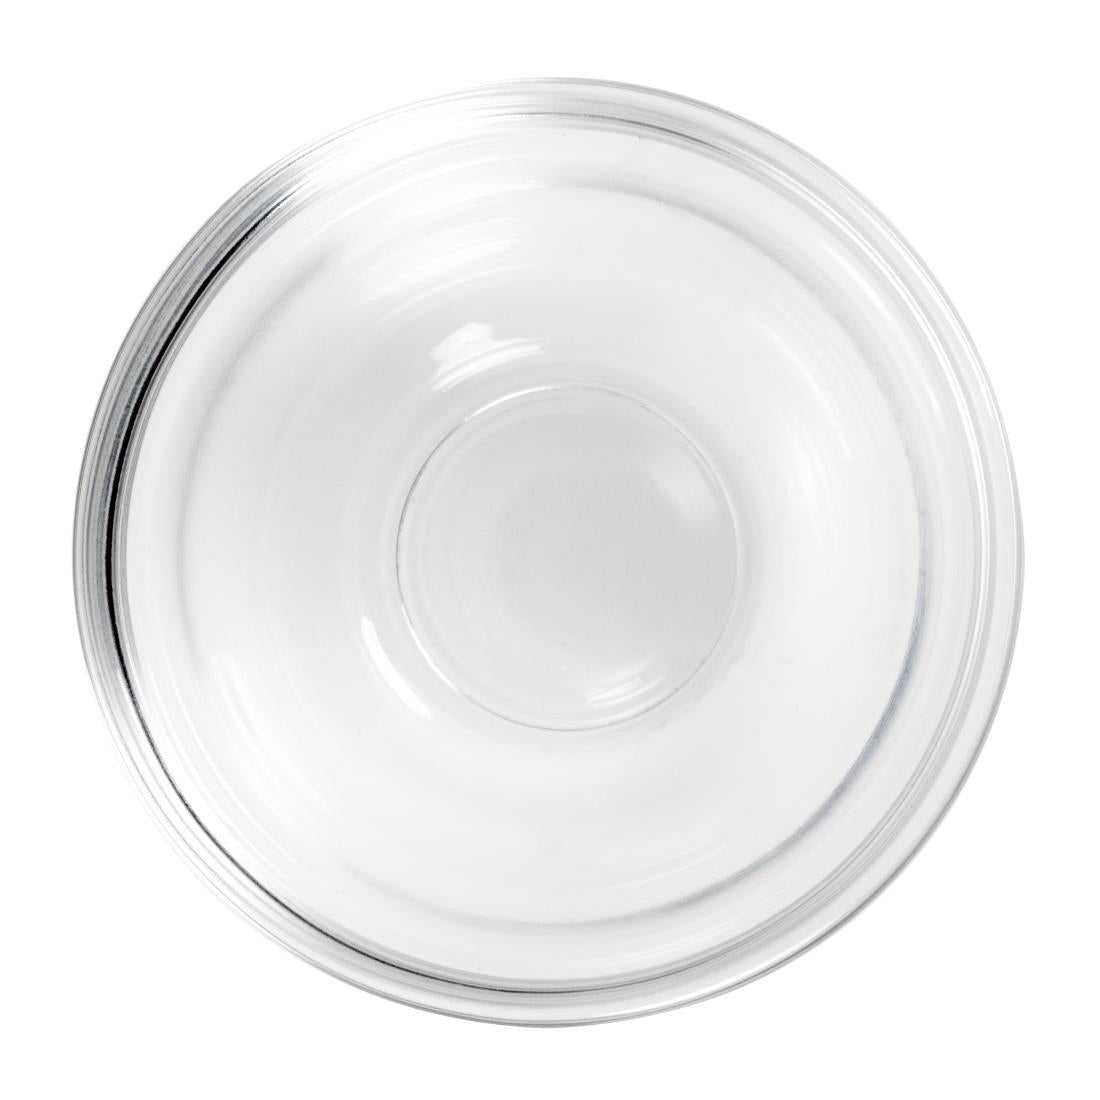 DK770 Arcoroc Chefs Glass Bowl 0.035 Ltr (Pack of 6) JD Catering Equipment Solutions Ltd